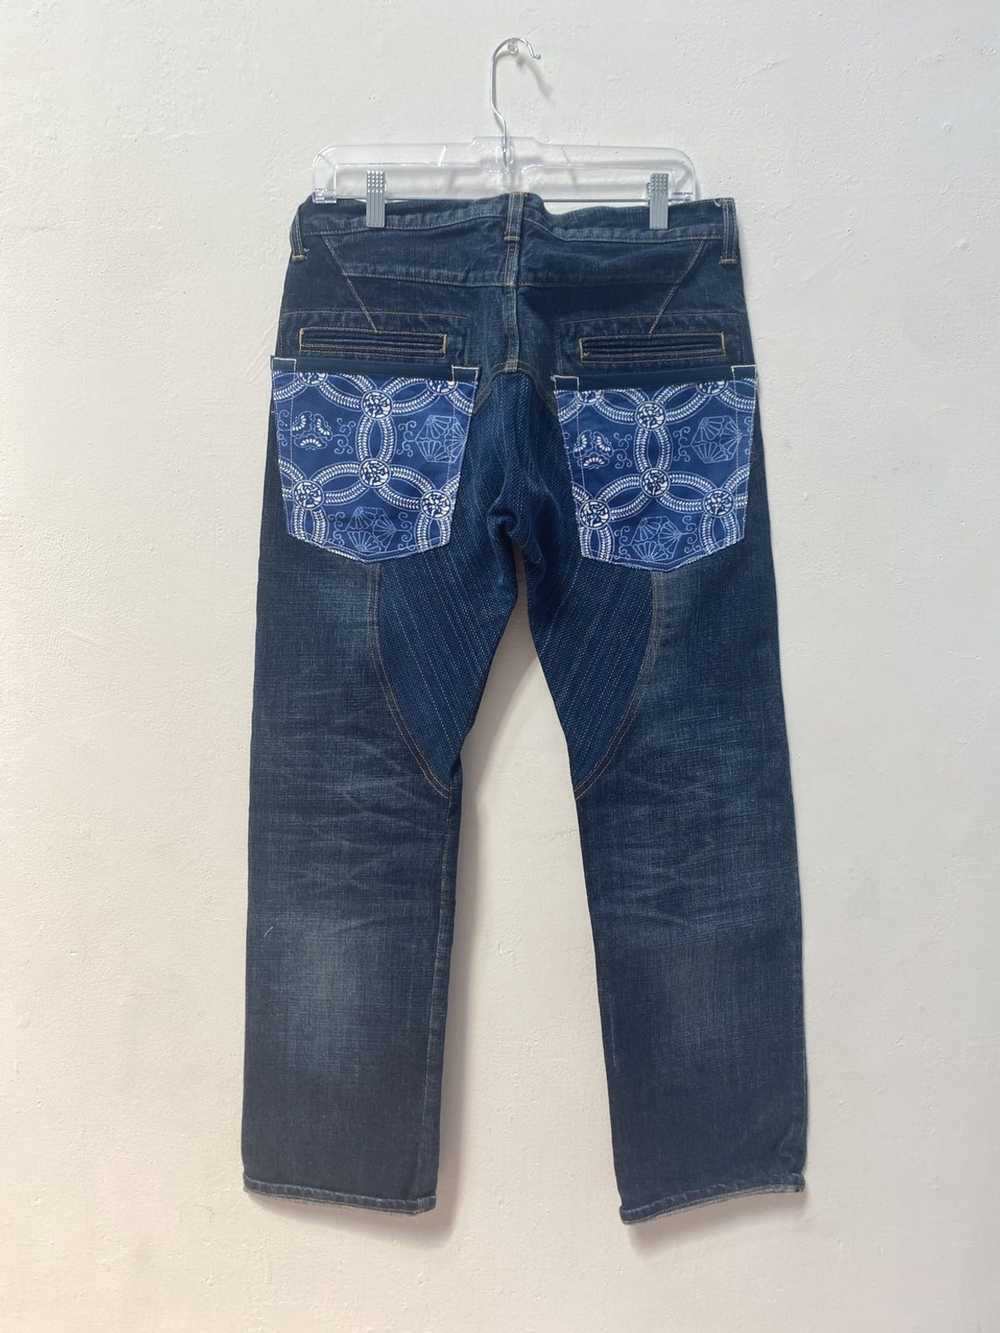 Junya Watanabe AW14 Boro Patterned Jeans - image 1